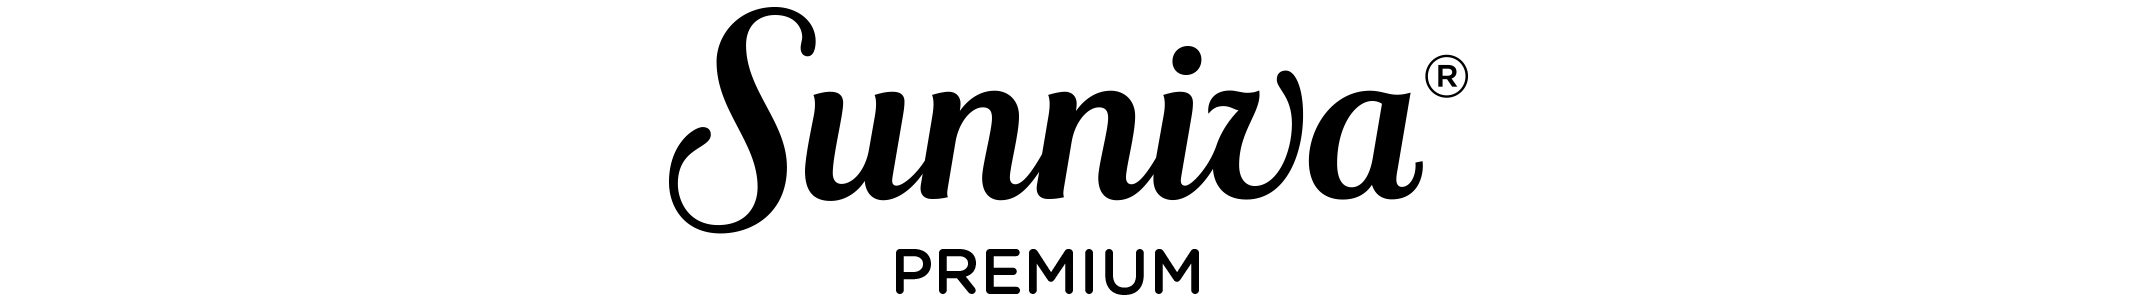 Tine Sunniva premium logo. Visuell identitet visual identity.